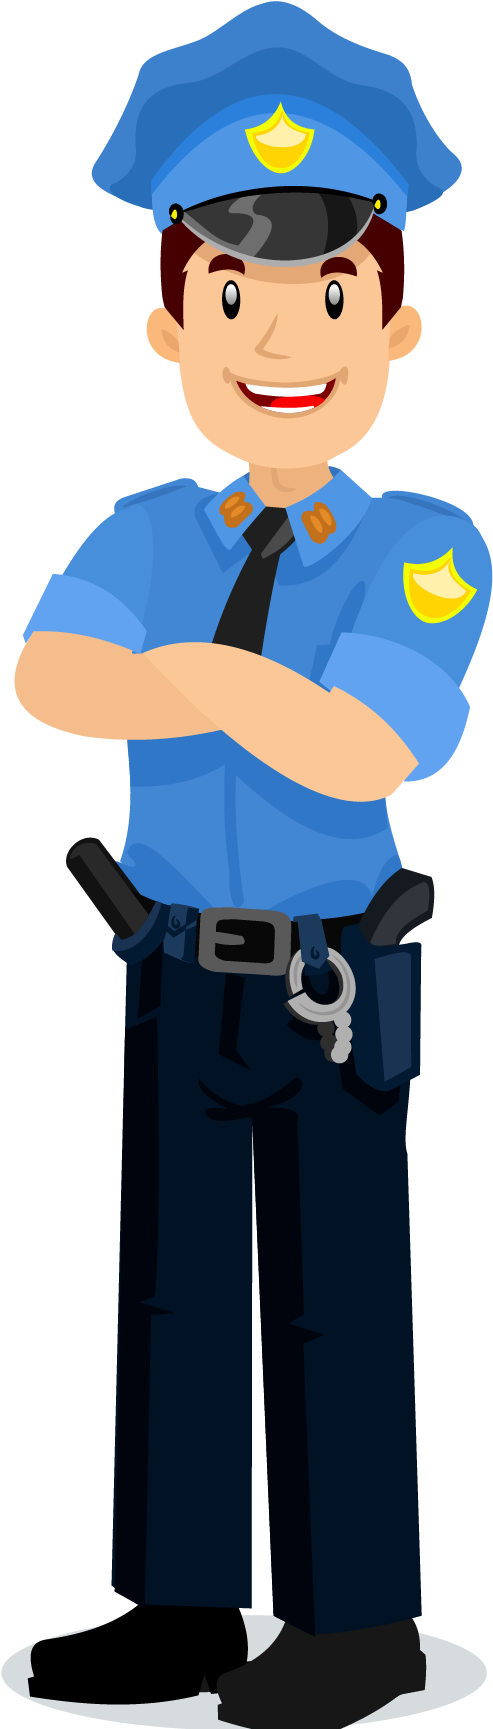 Friendly Cartoon Policeman Standing Vector PNG